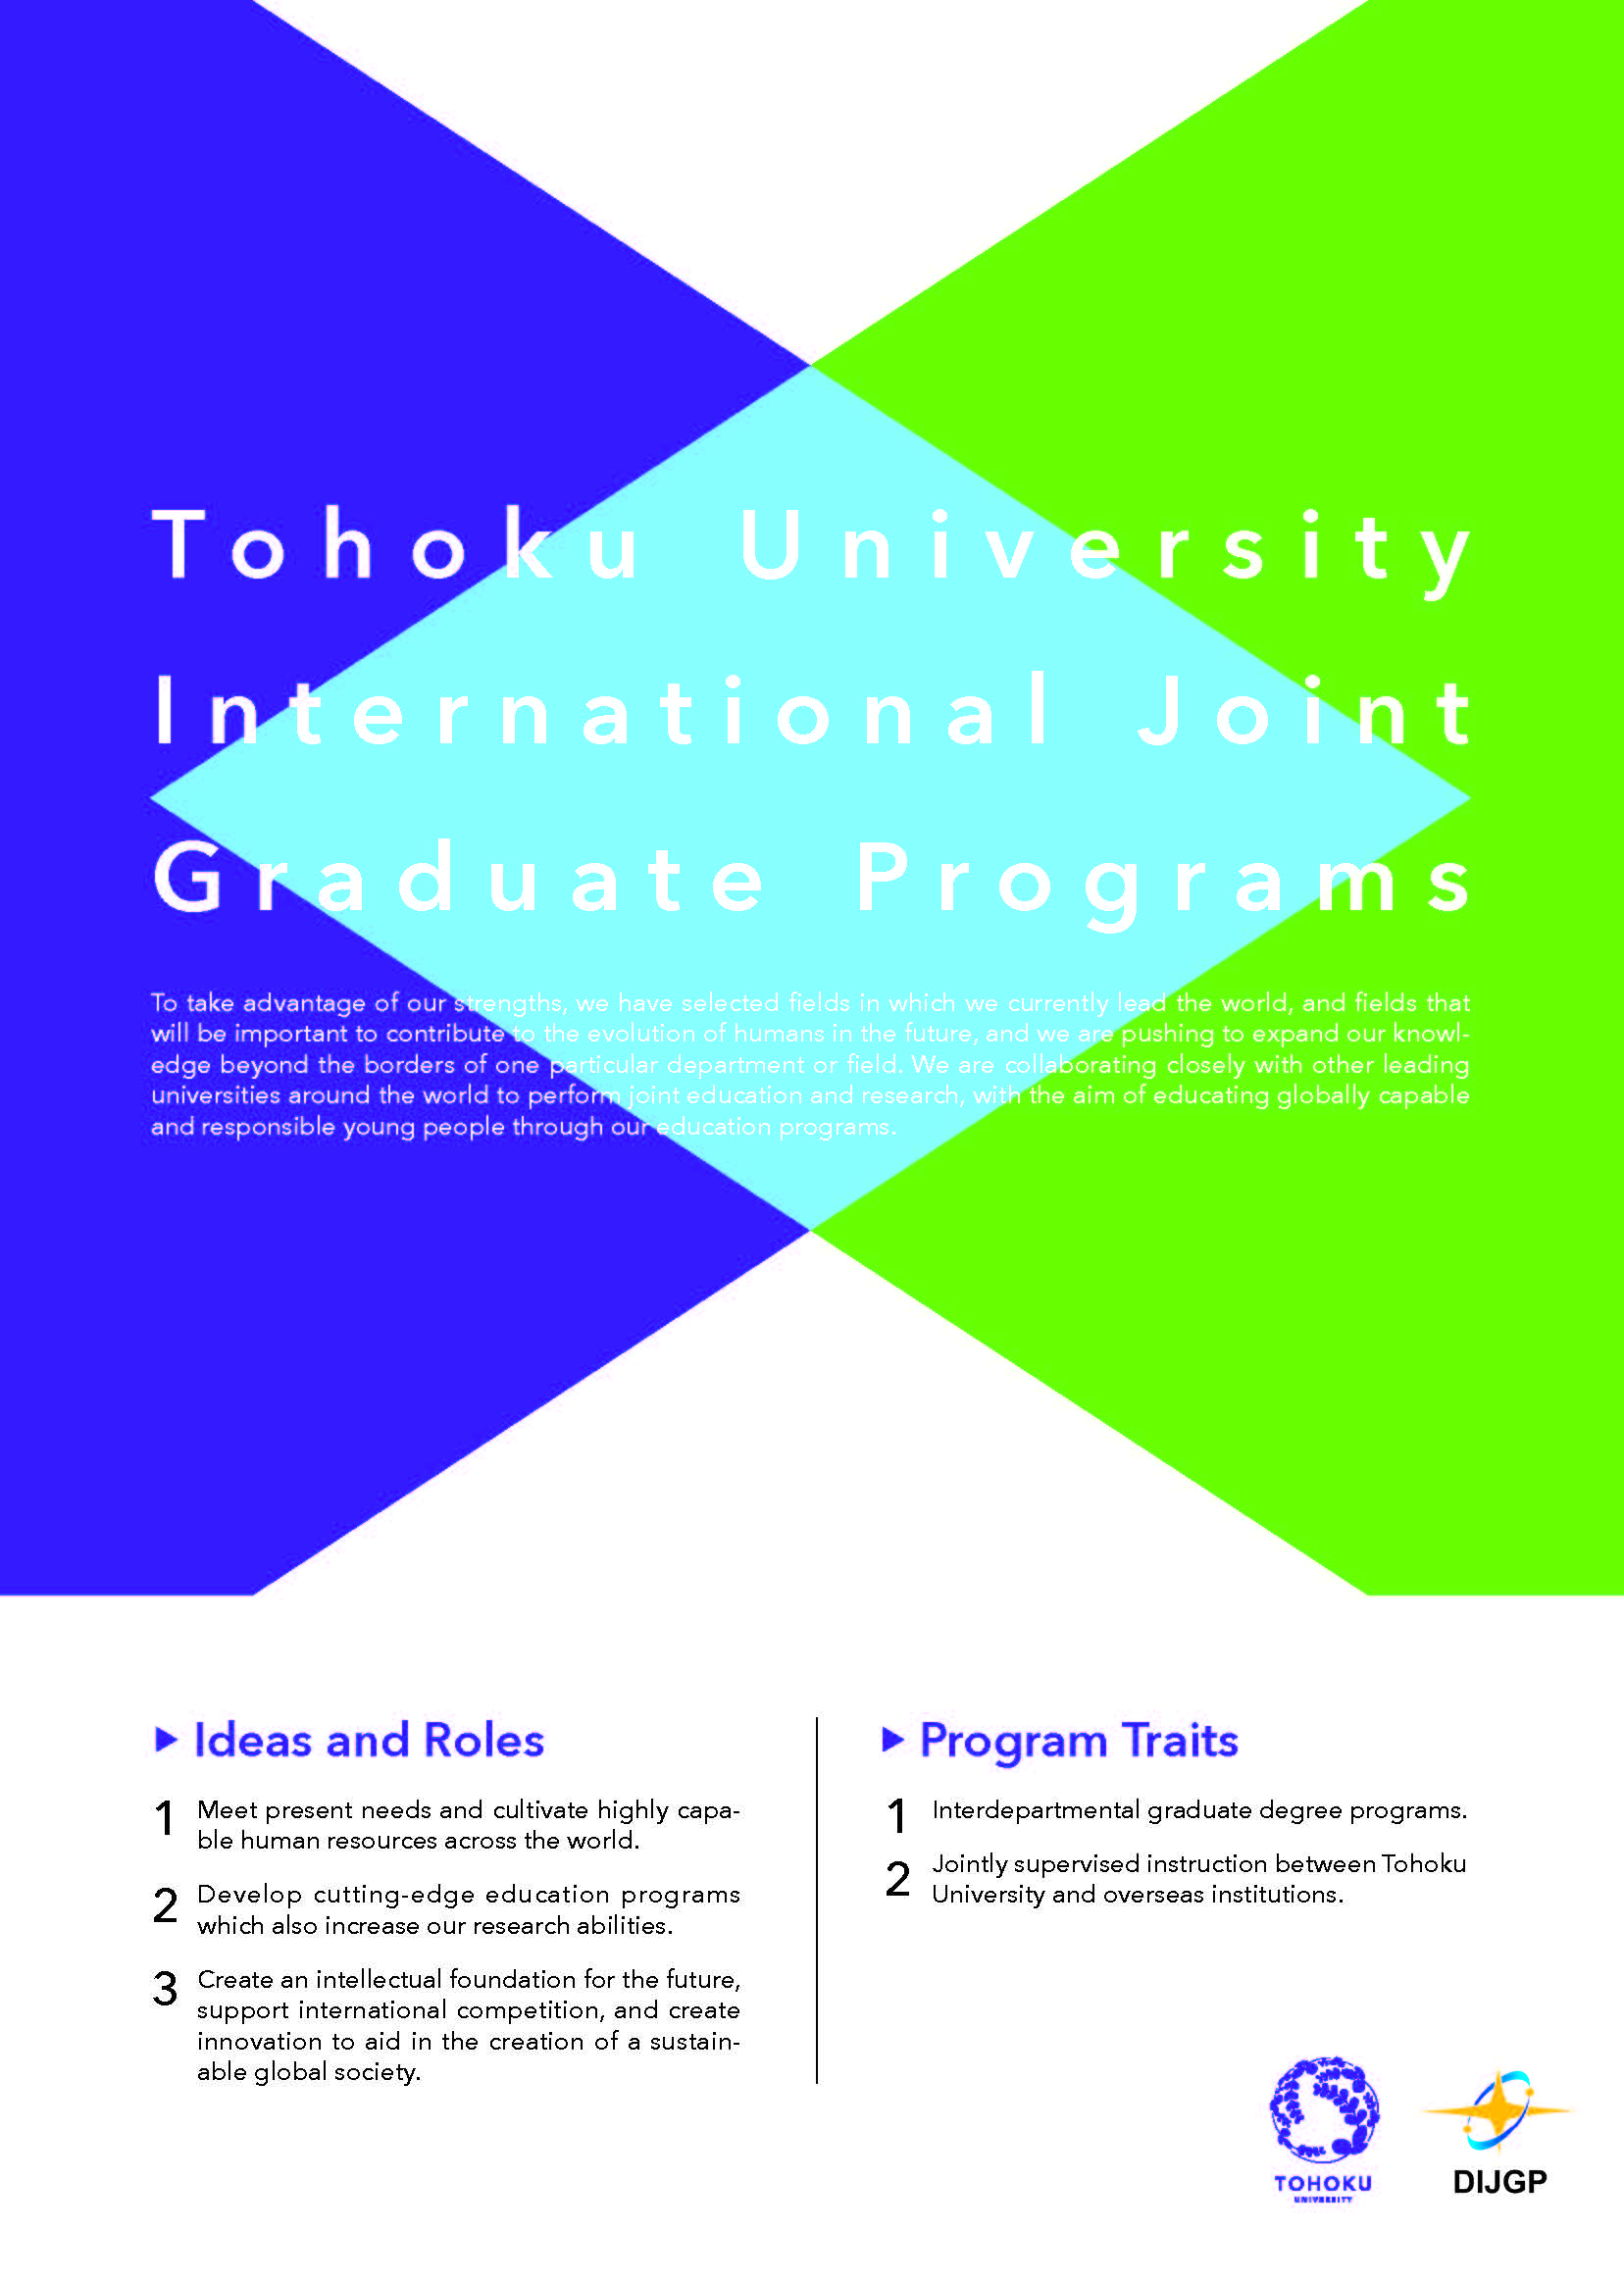 Tohoku University International Joint Graduate School Programs